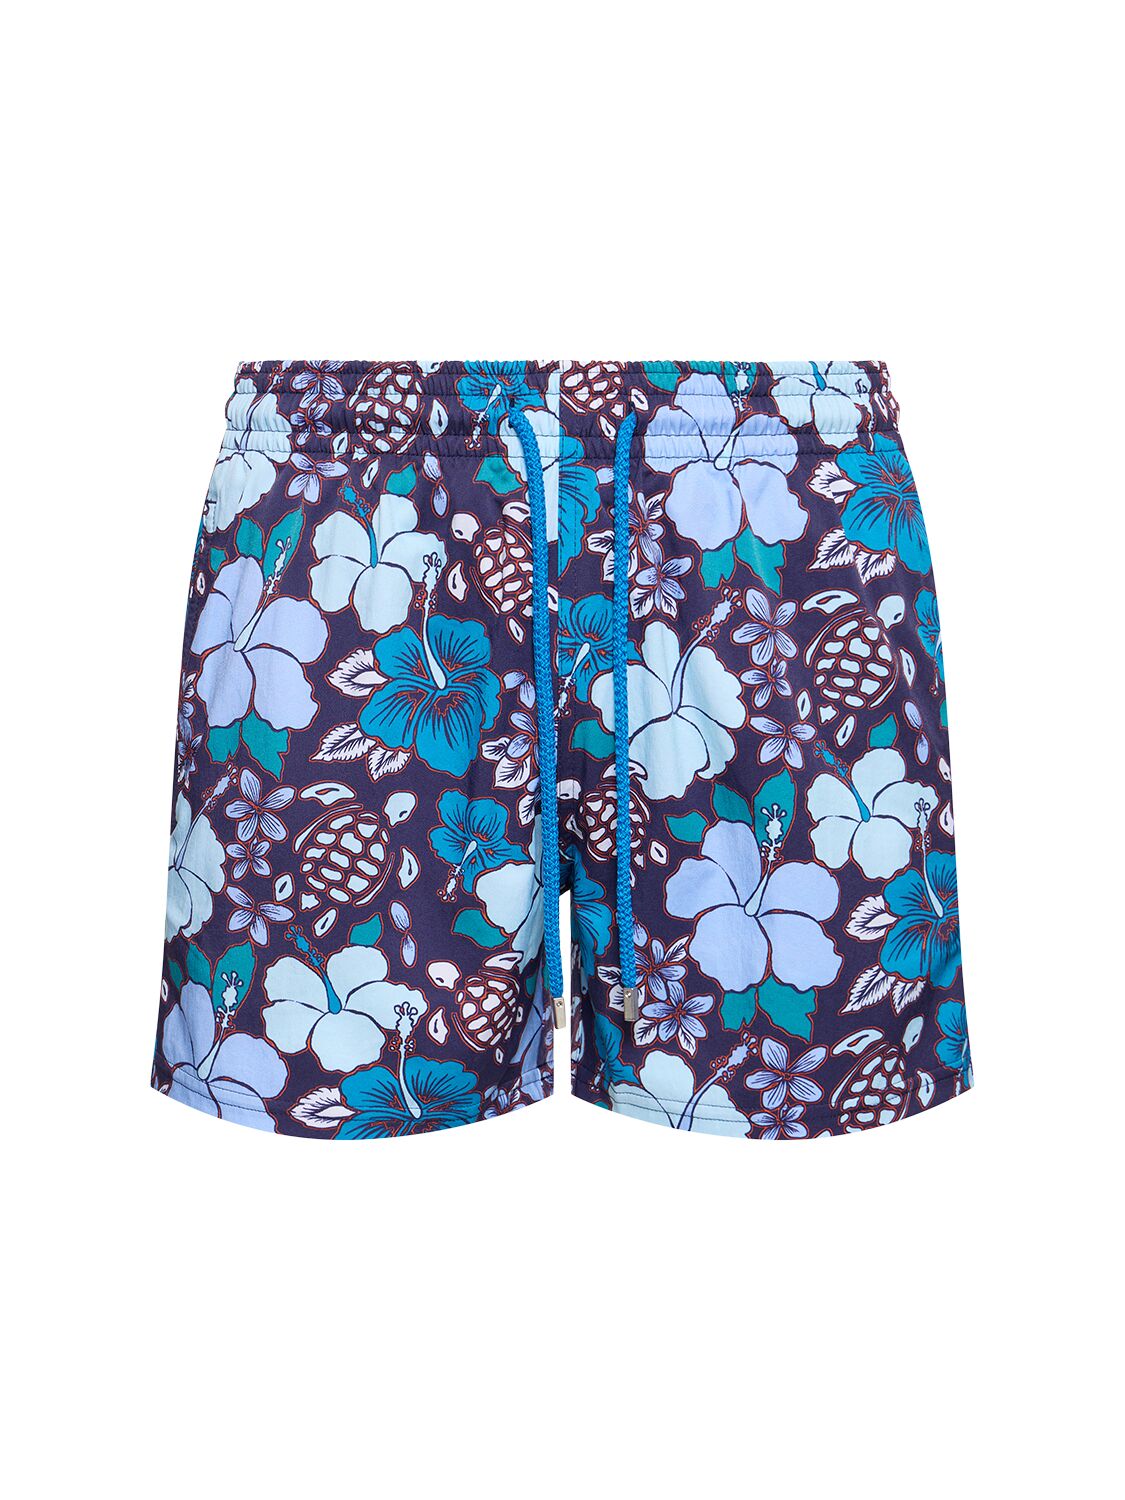 Moorise Print Stretch Nylon Swim Shorts